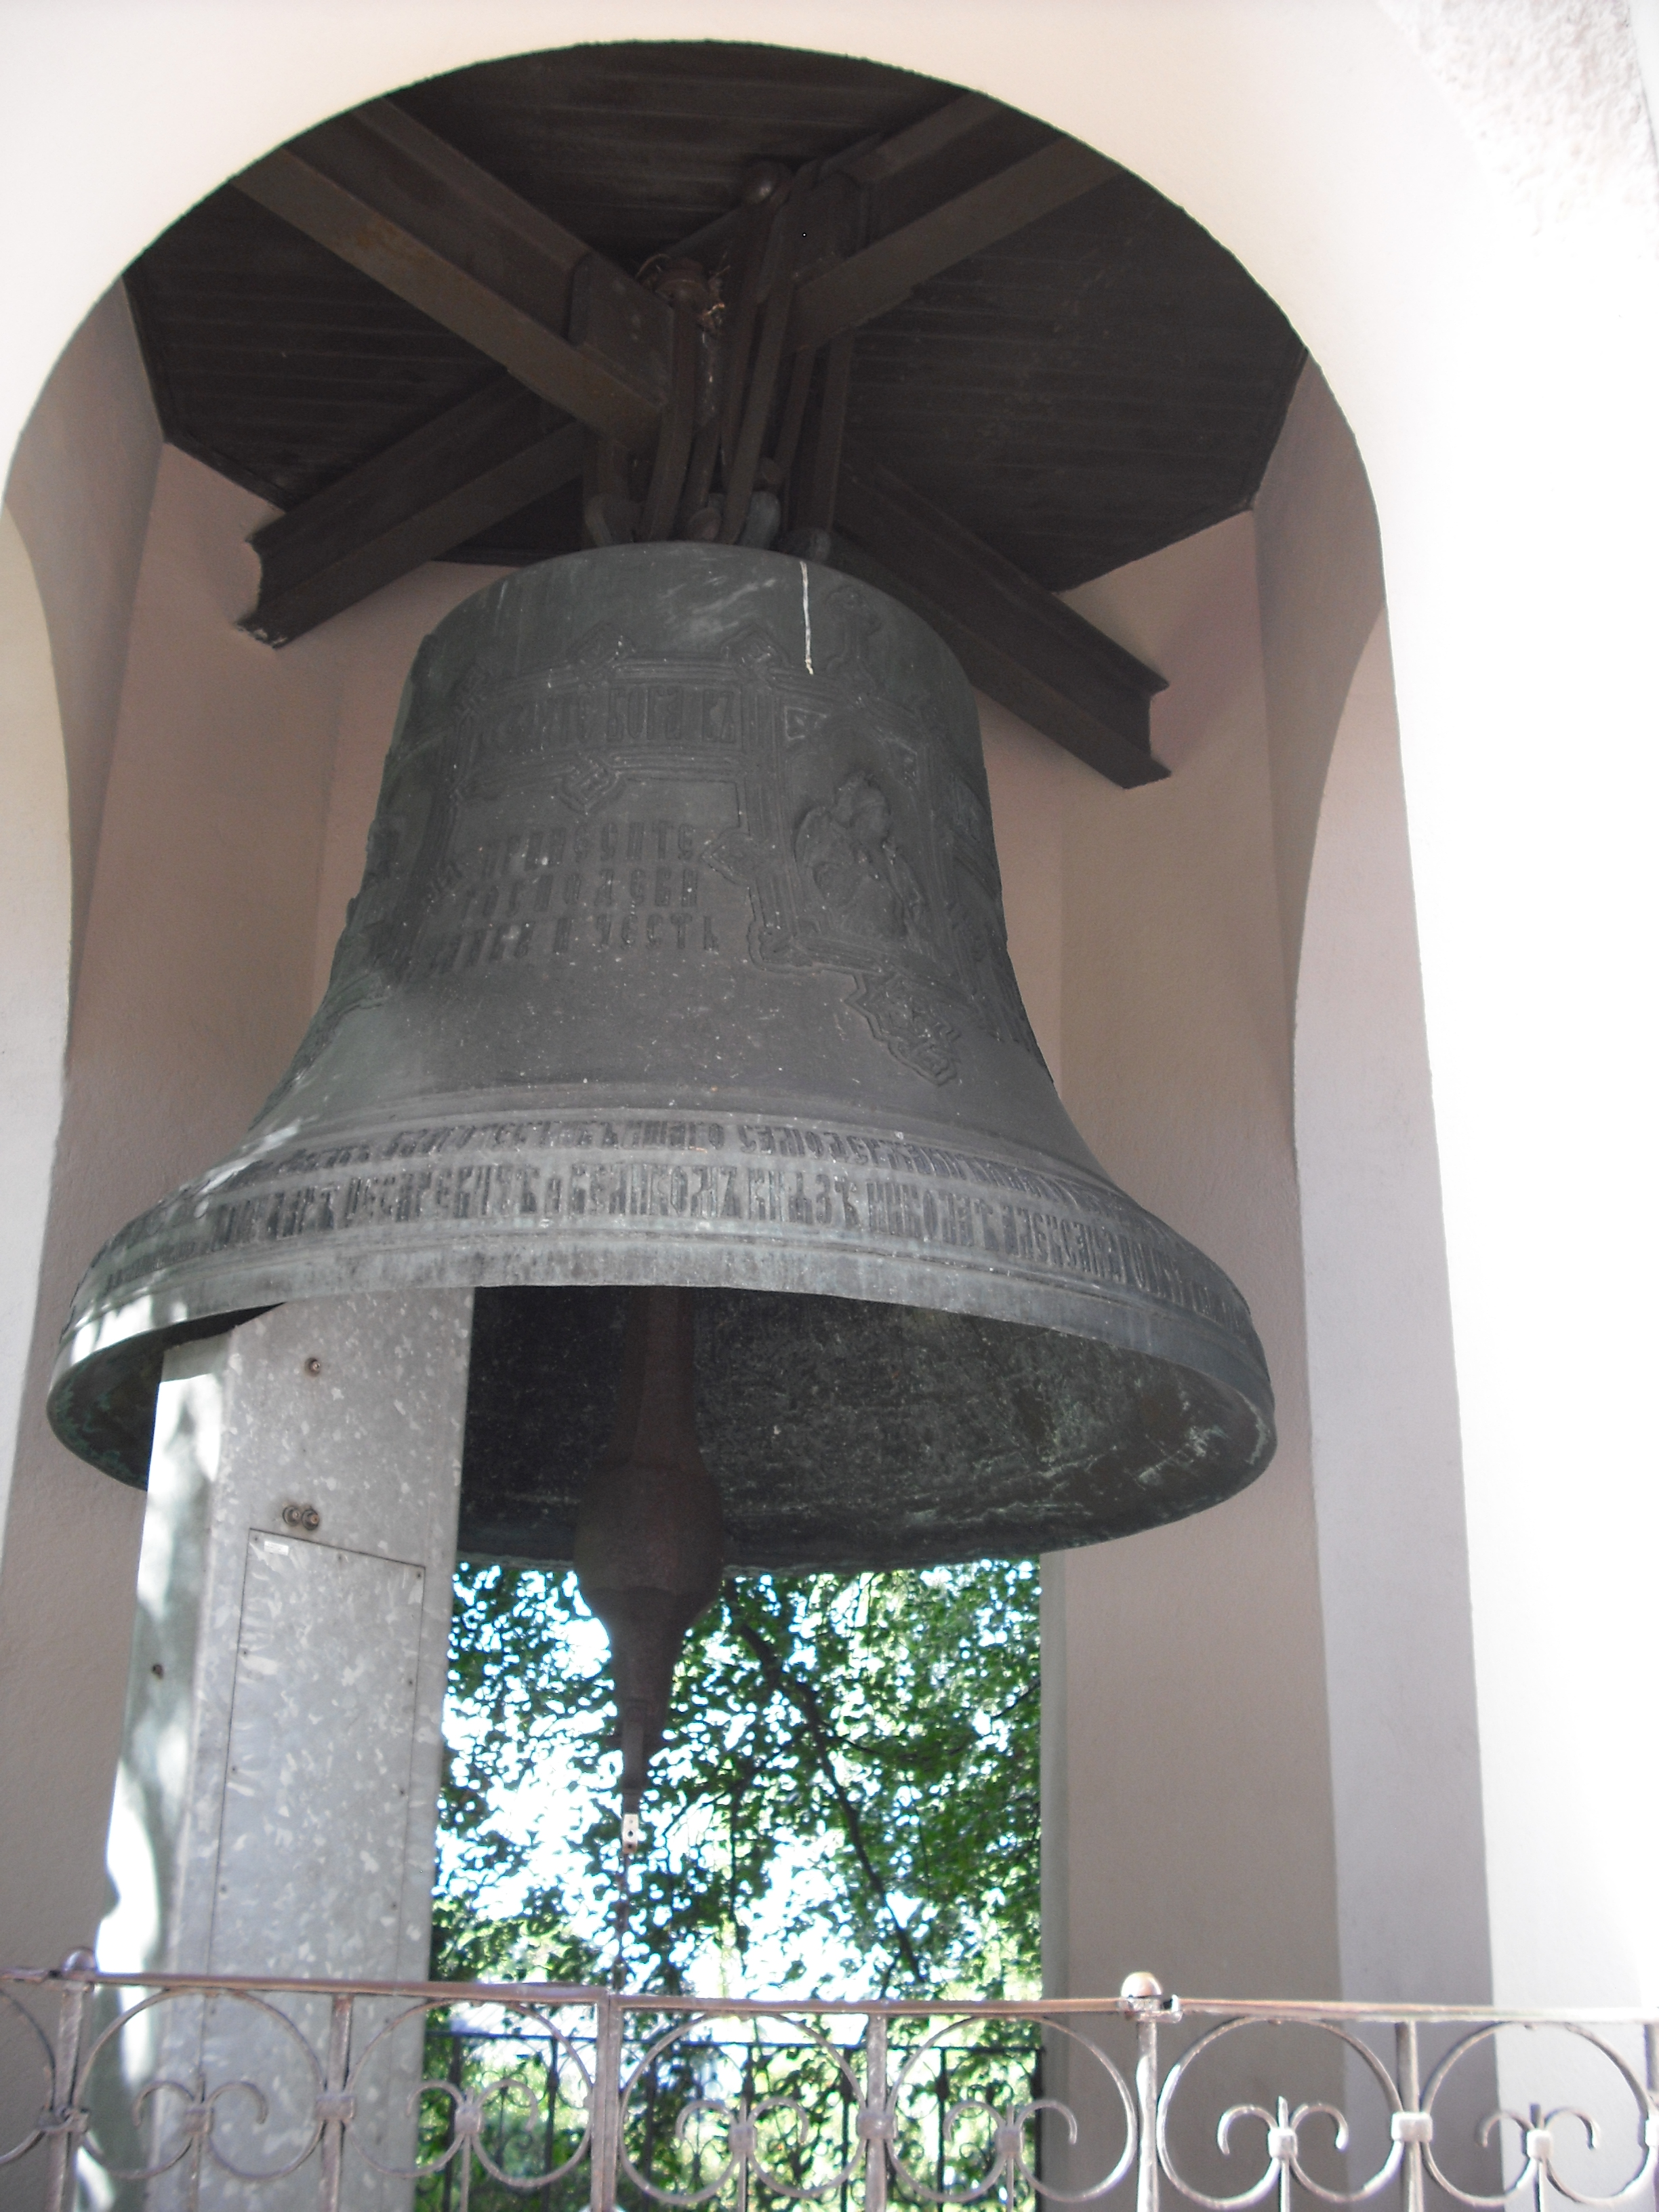 Church bell - Wikipedia